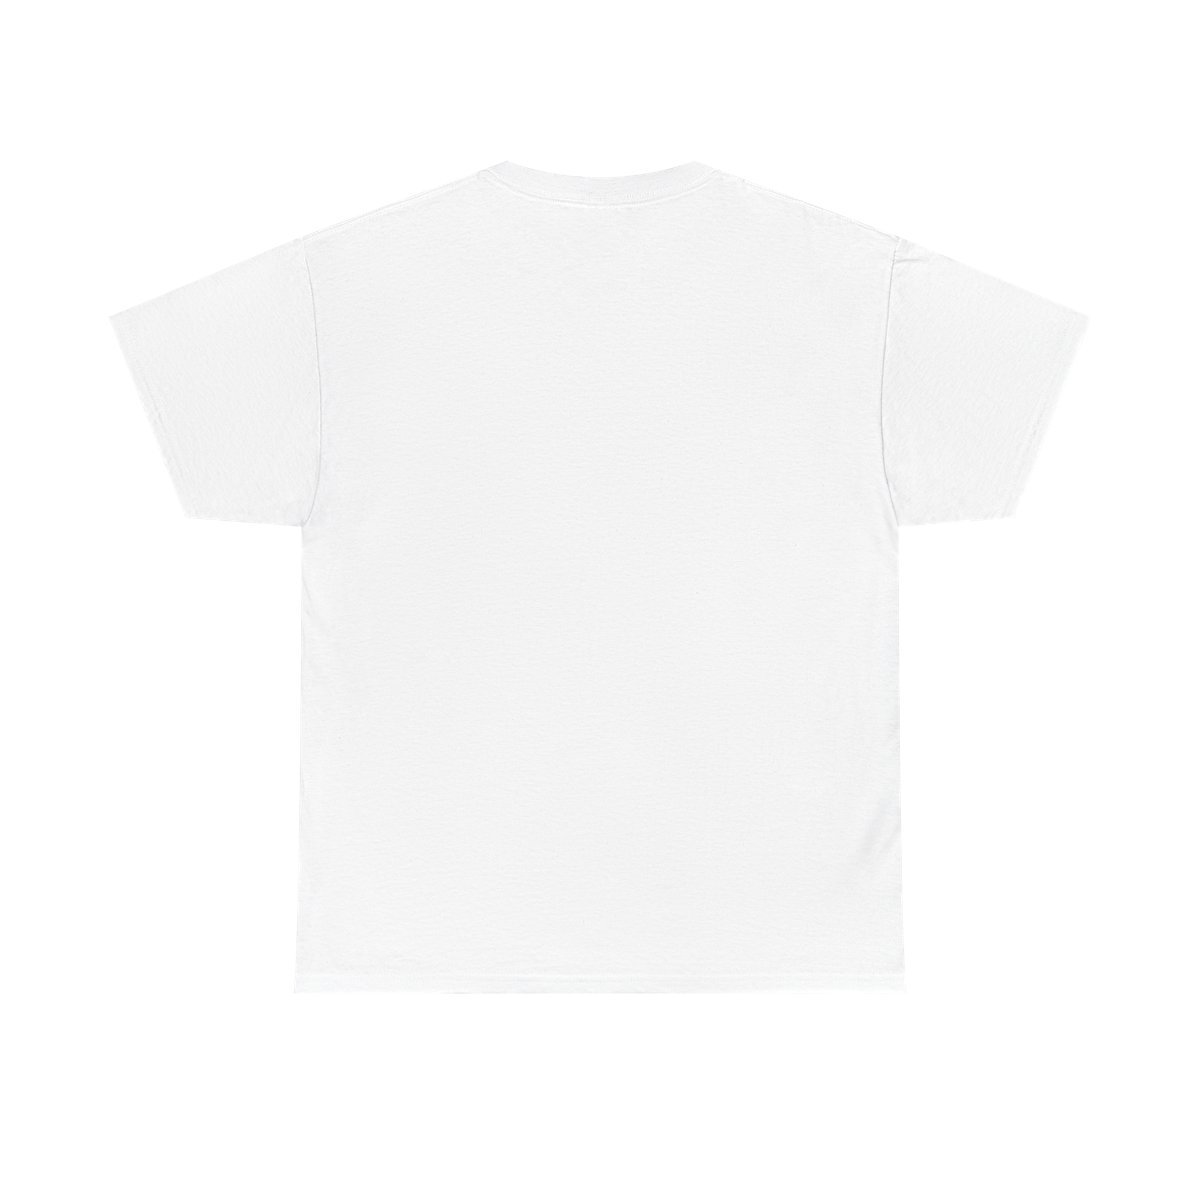 Mawcore – Drum Crest Short Sleeve Tshirt